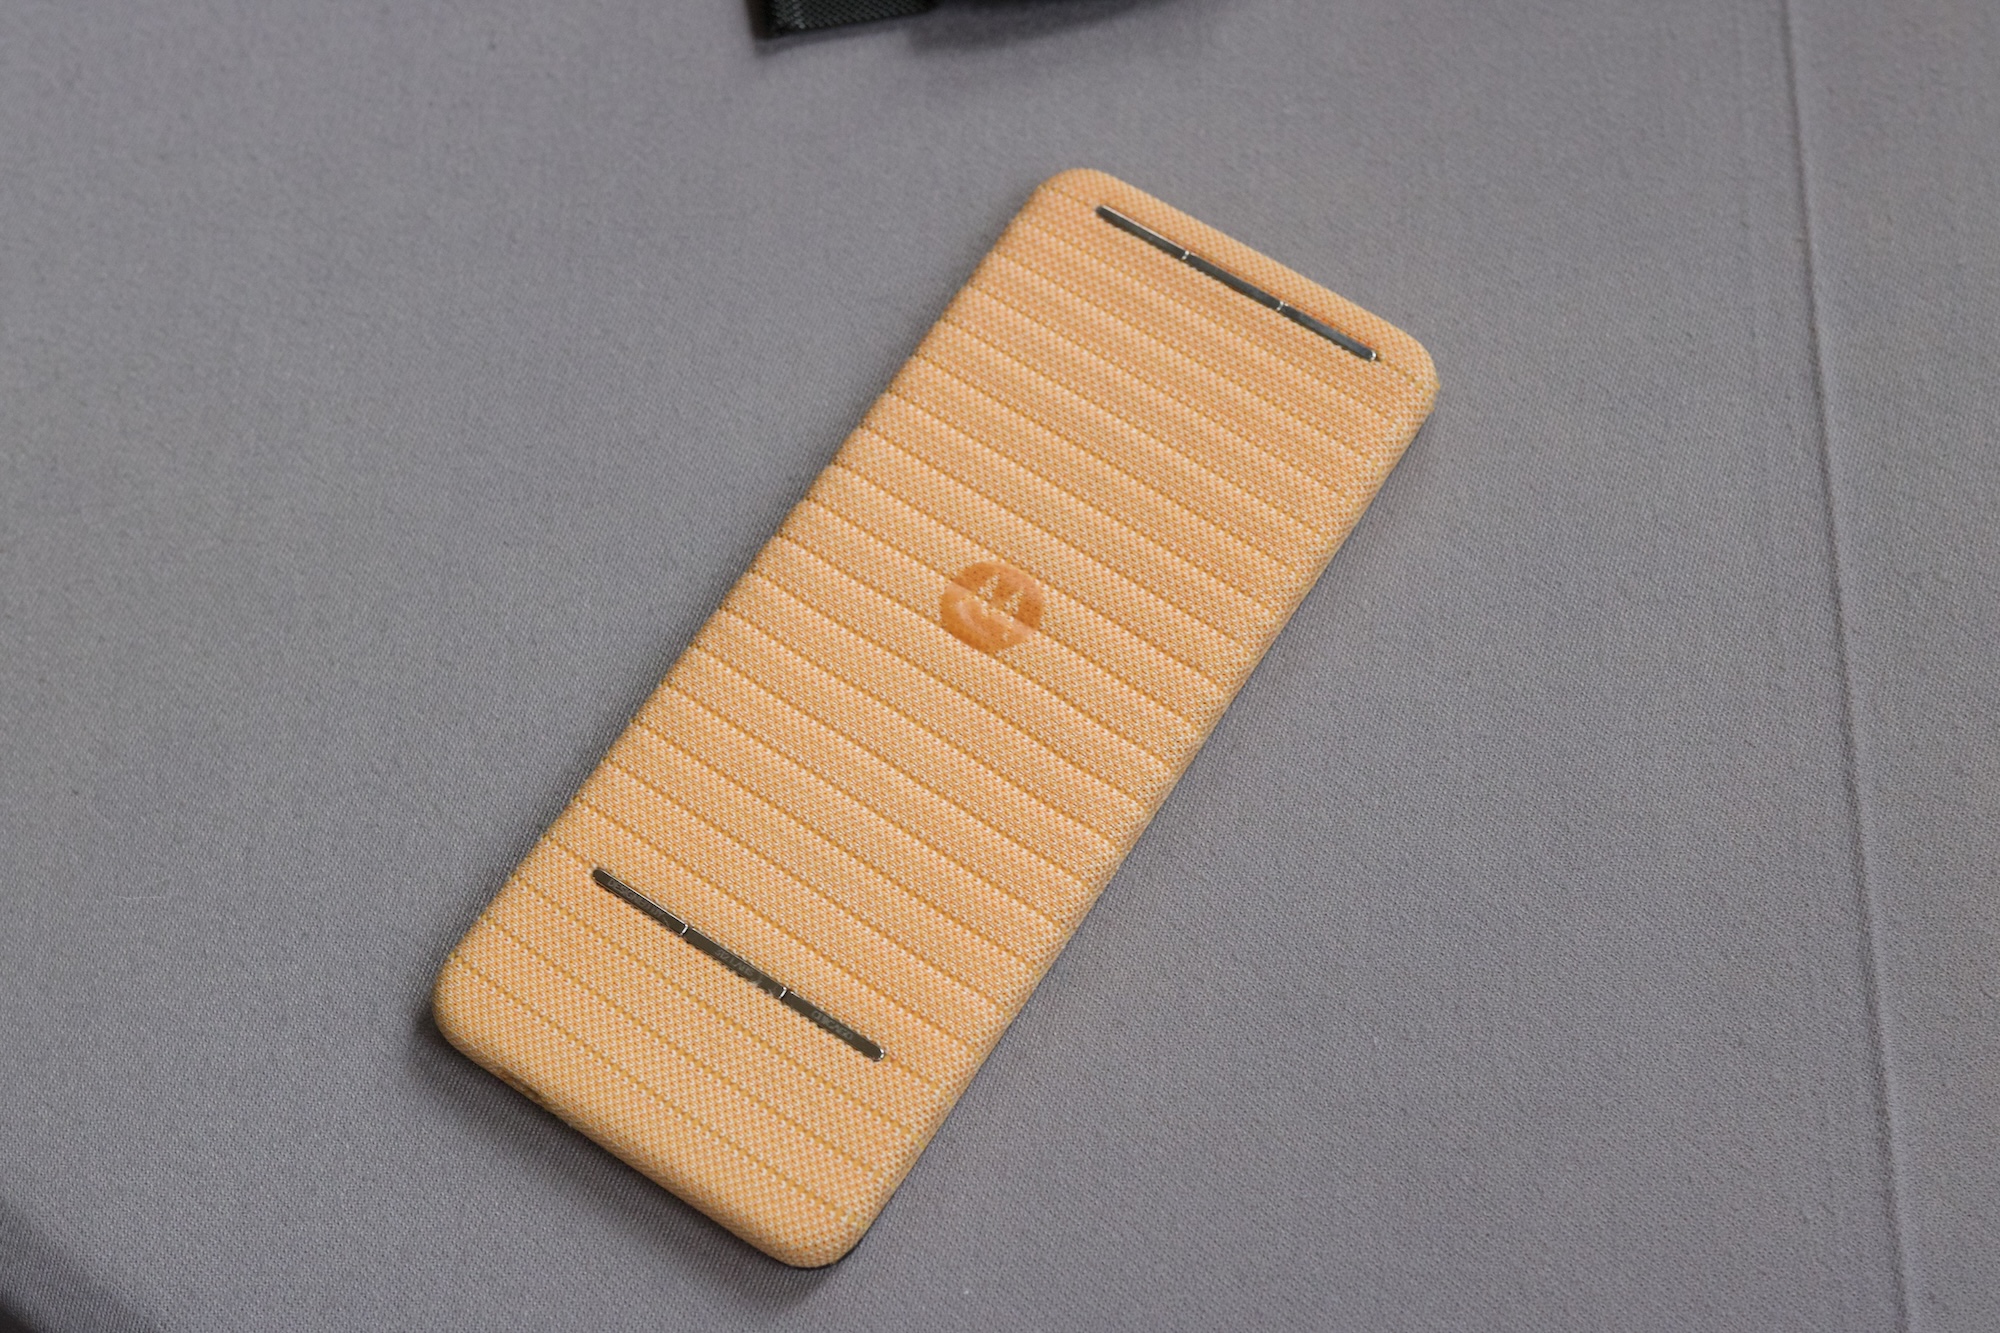 The back of Motorola's concept folding phone.